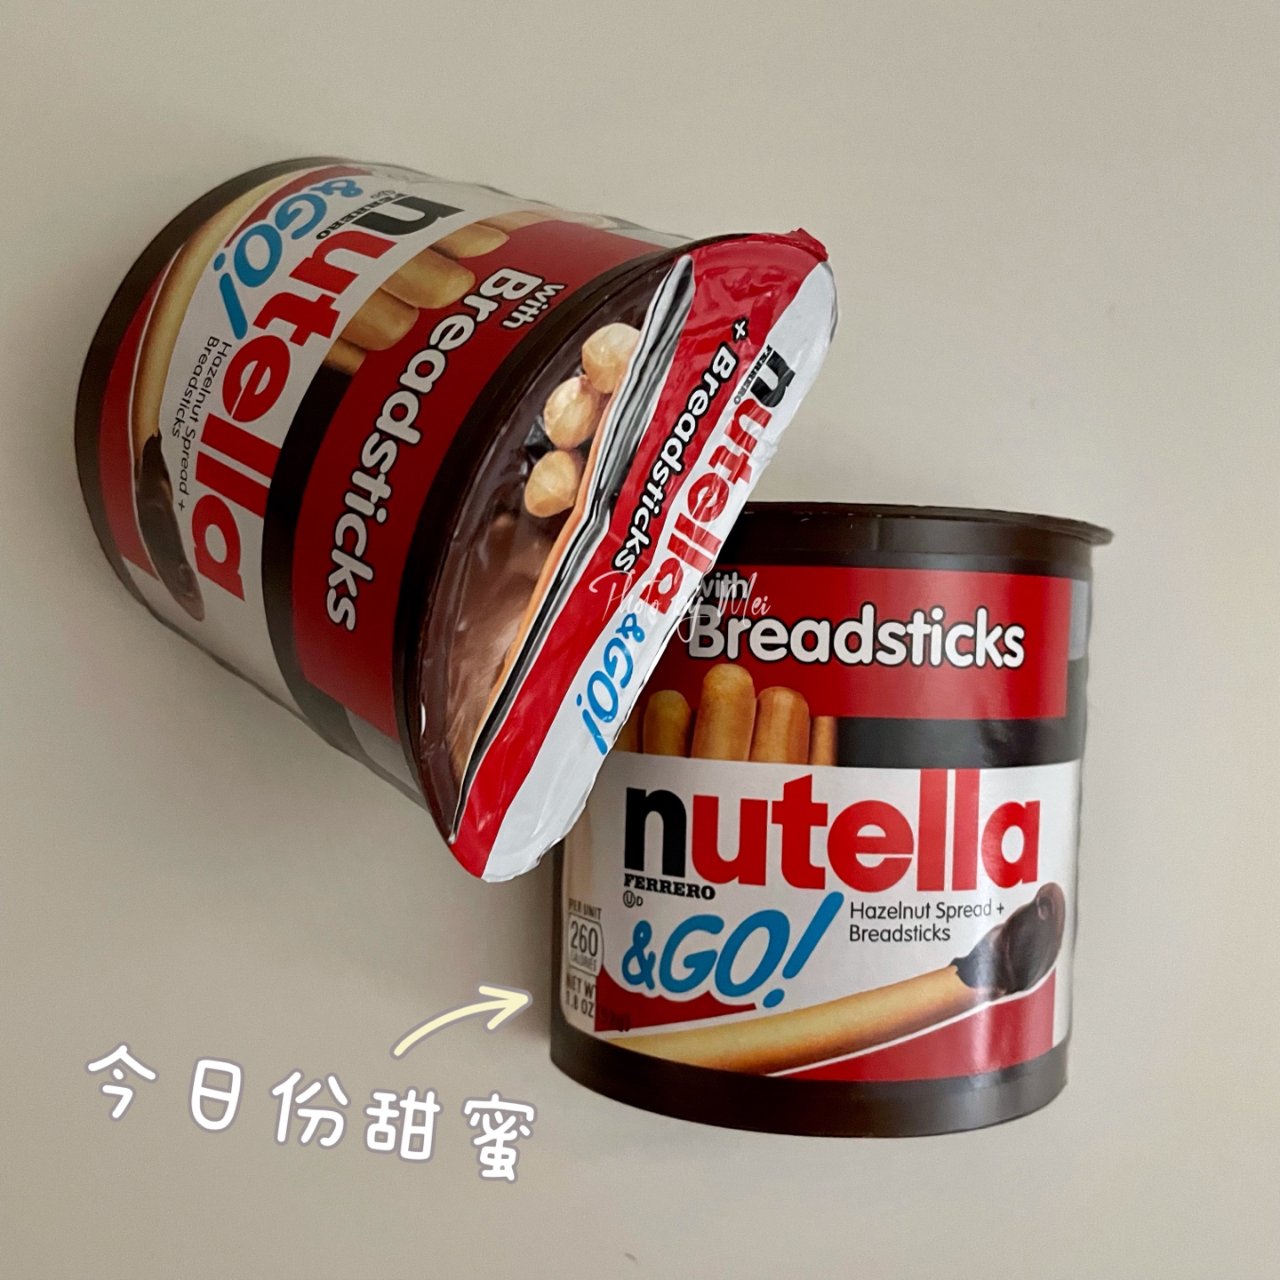 Nutella and Go 榛子口味巧克力酱+手指饼干 12杯